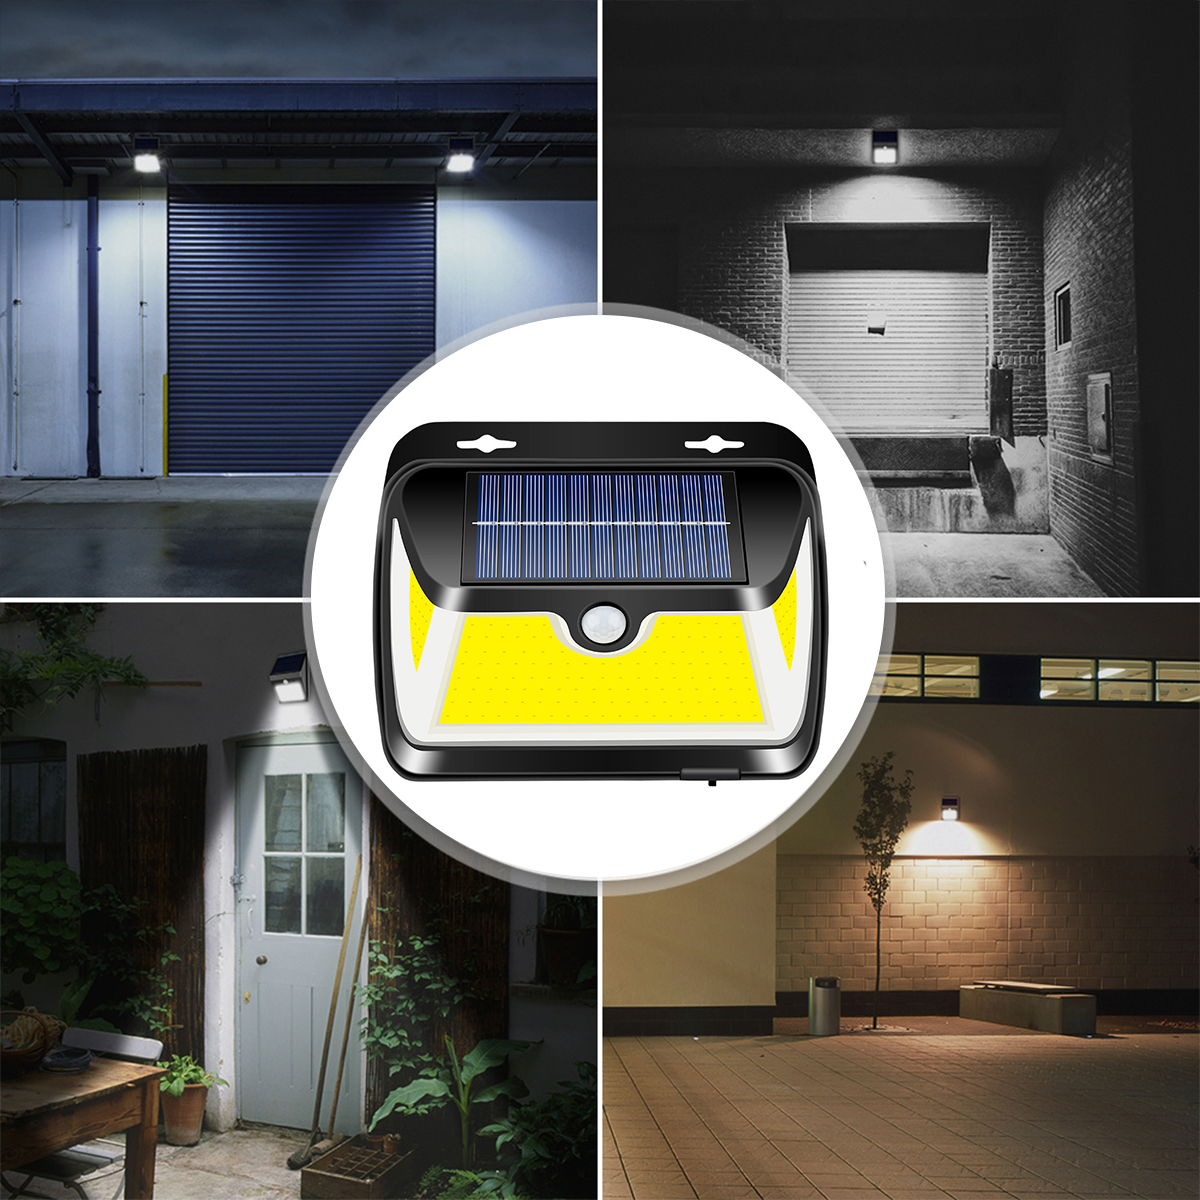 163-COB-LED-Solar-Light-Motion-Sensor-PIR-Light-Waterproof-Safety-Outdoor-Garden-Household-Accessori-1762437-10